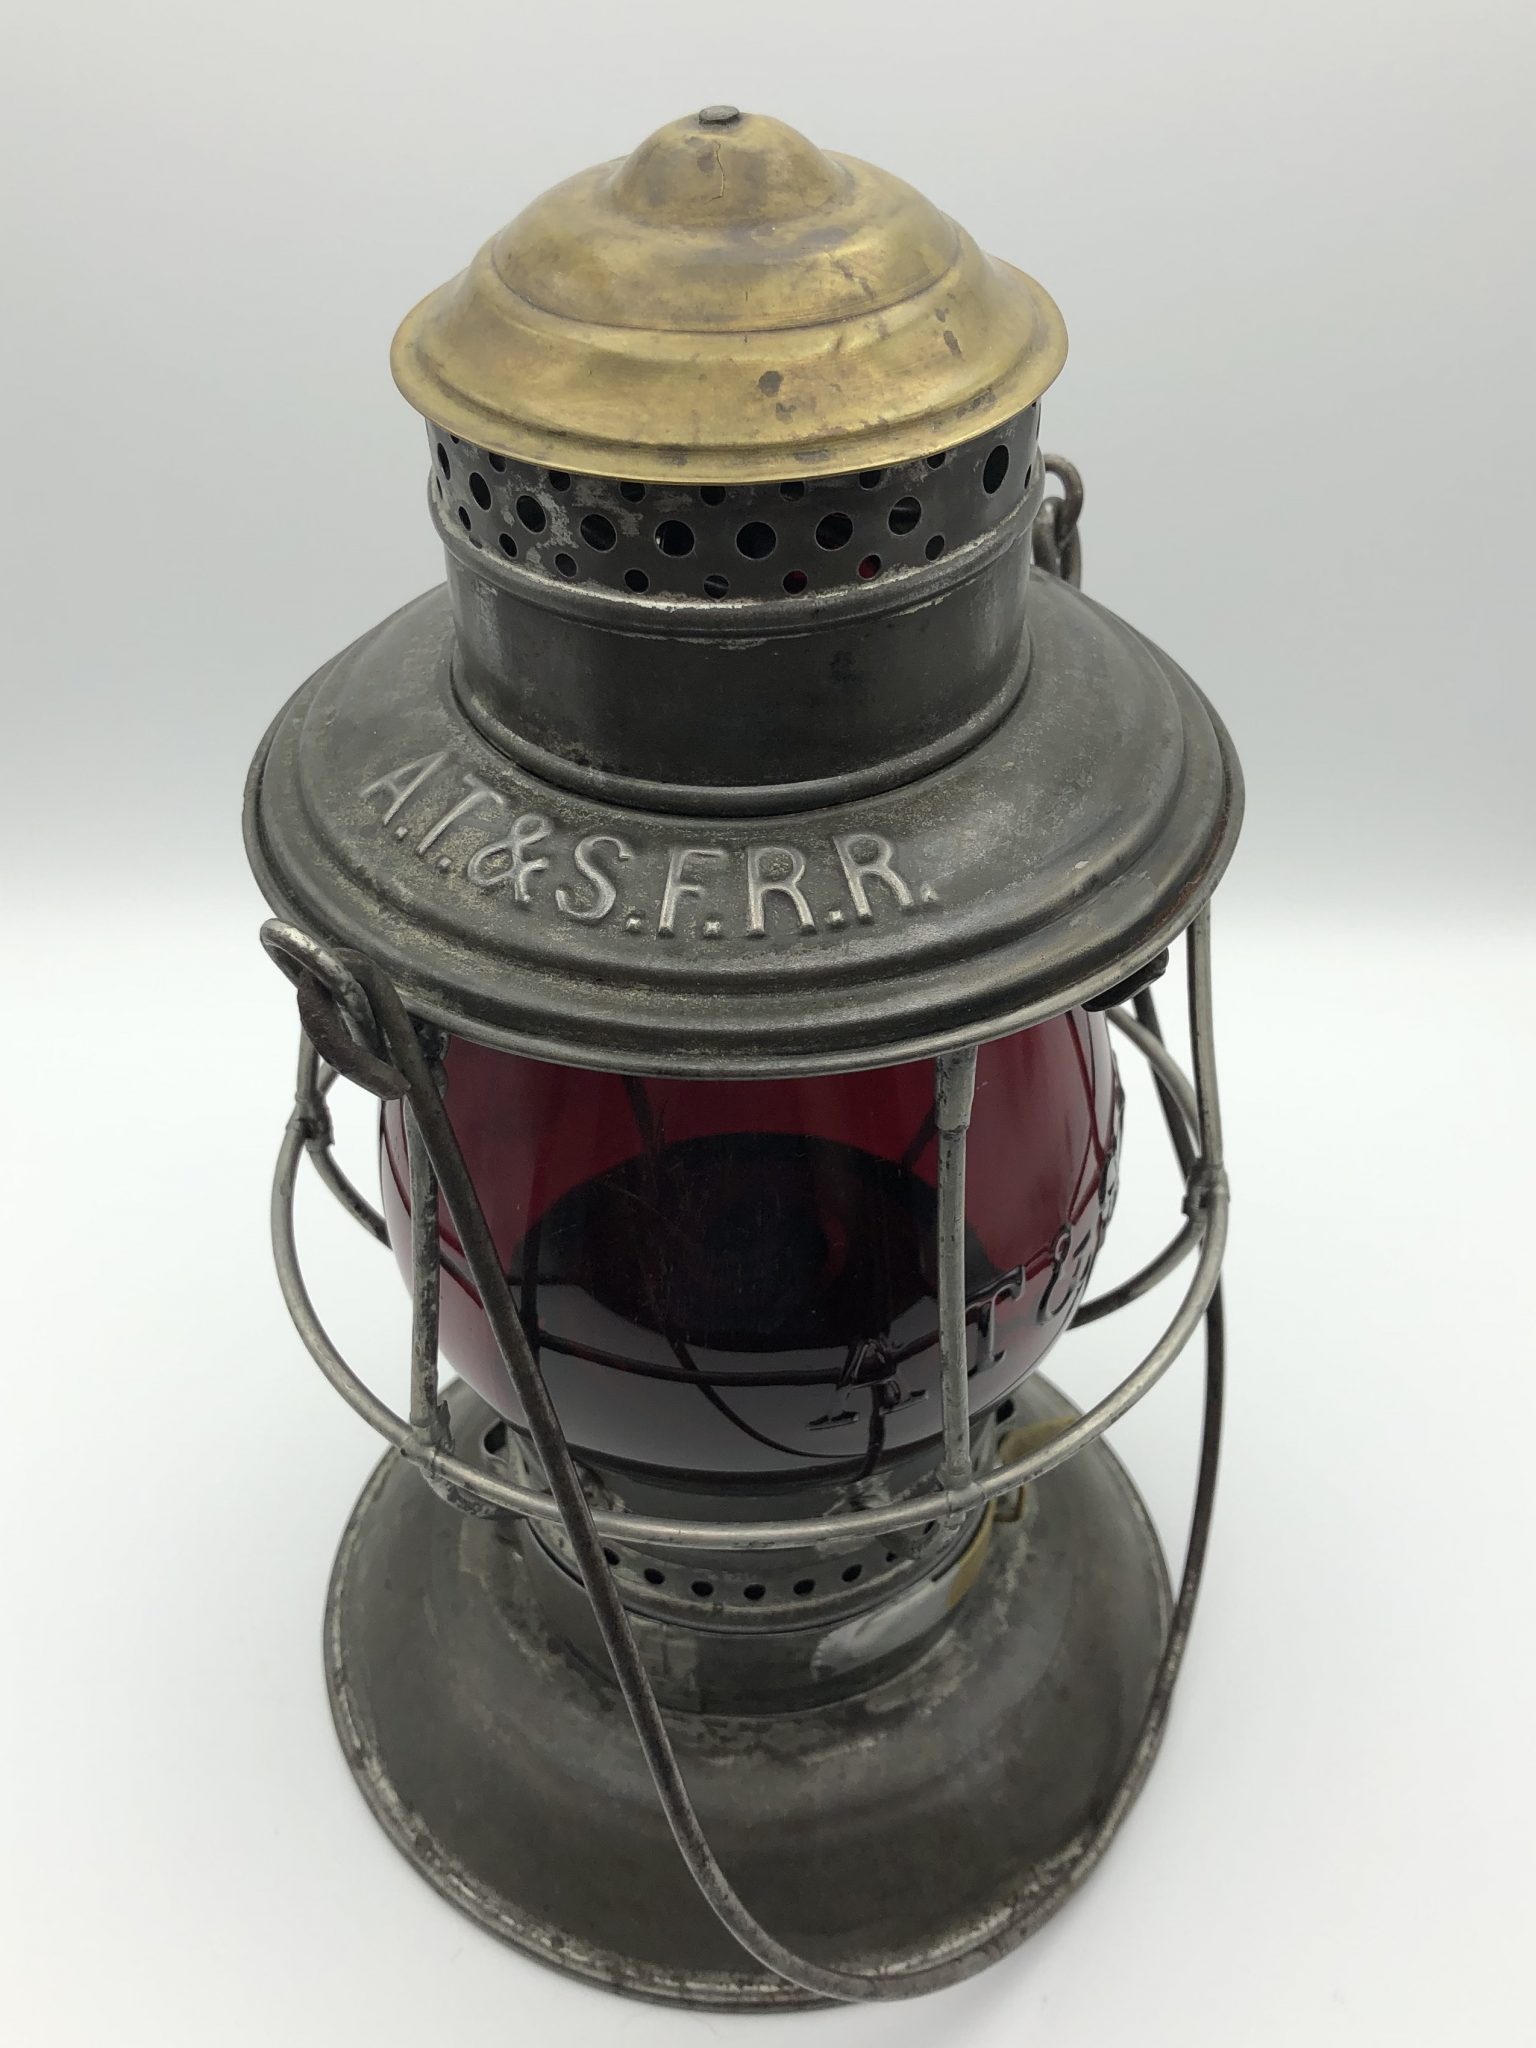 AT&SFRR Brasstop Railroad Lantern